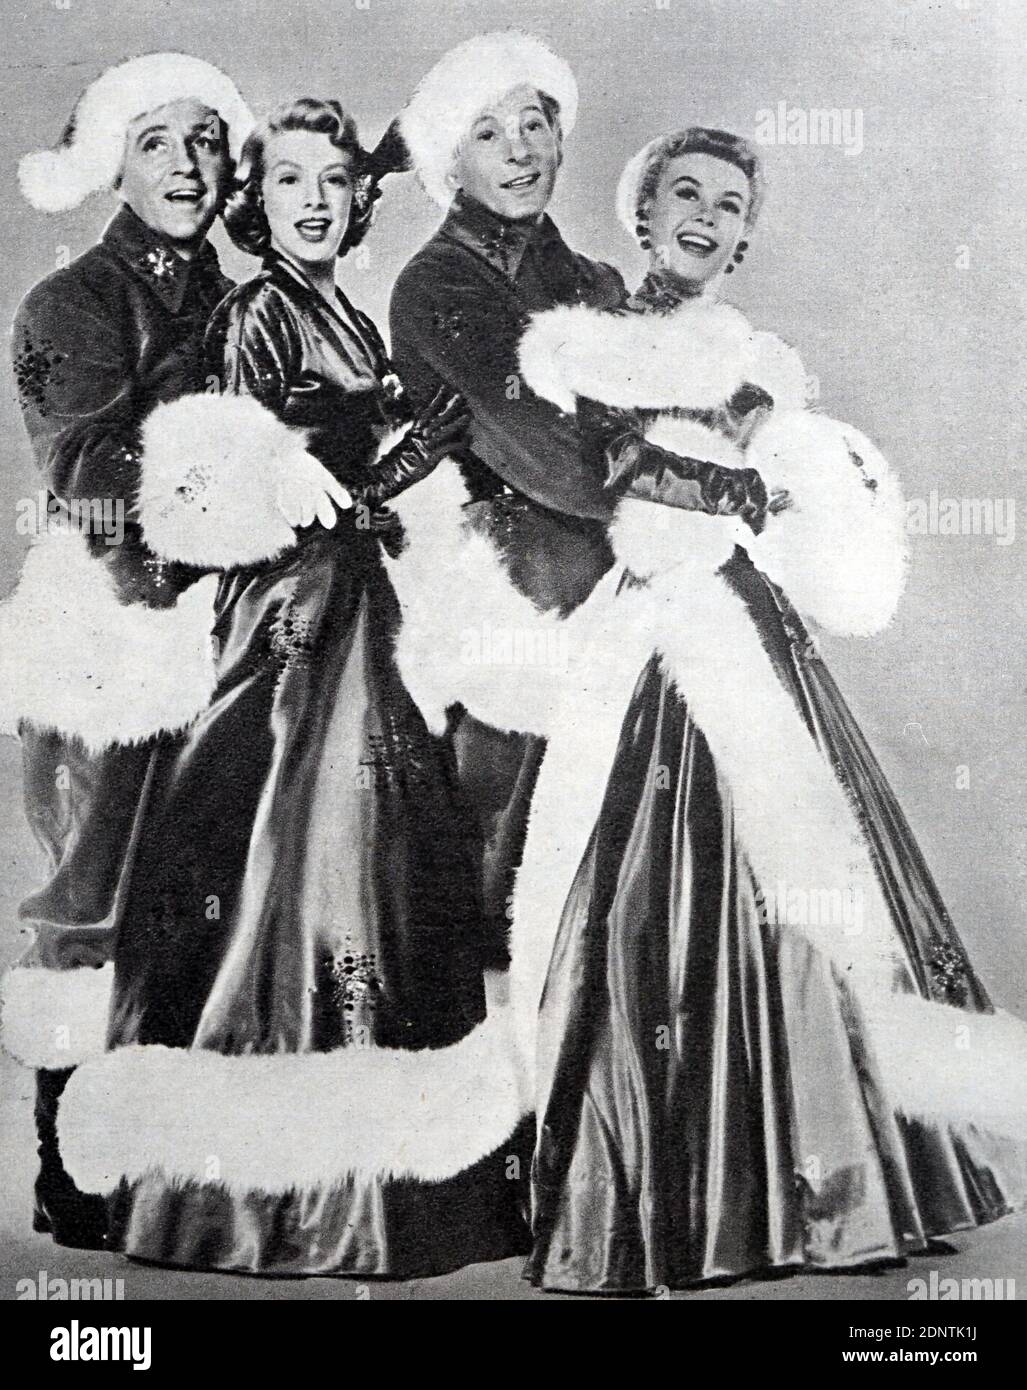 Film still from 'White Christmas' starring Vera-Ellen, Rosemary Clooney, Danny Kaye, and Bing Crosby. Stock Photo